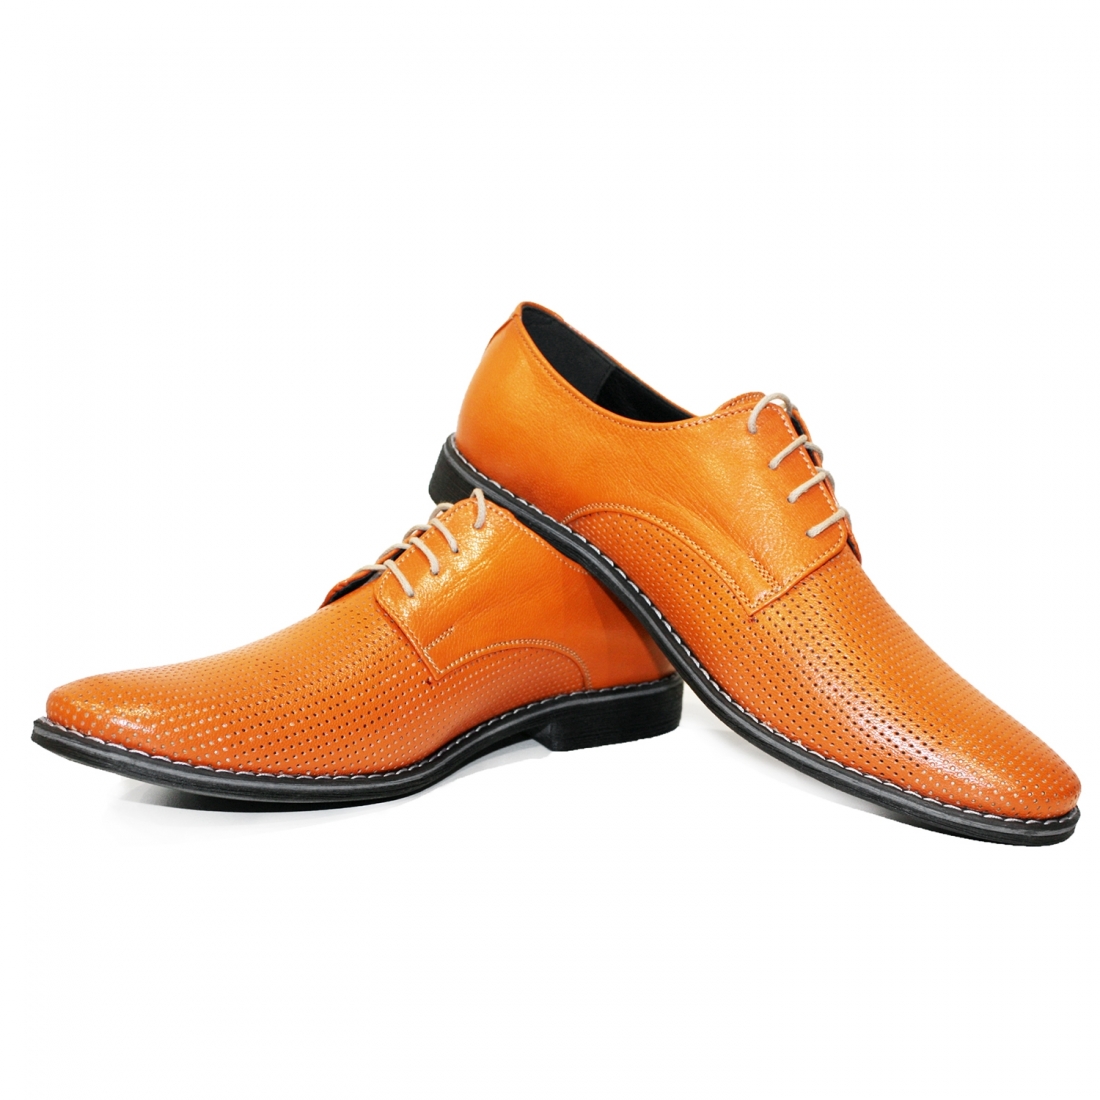 Modello Pomarone - Classic Shoes - Handmade Colorful Italian Leather Shoes